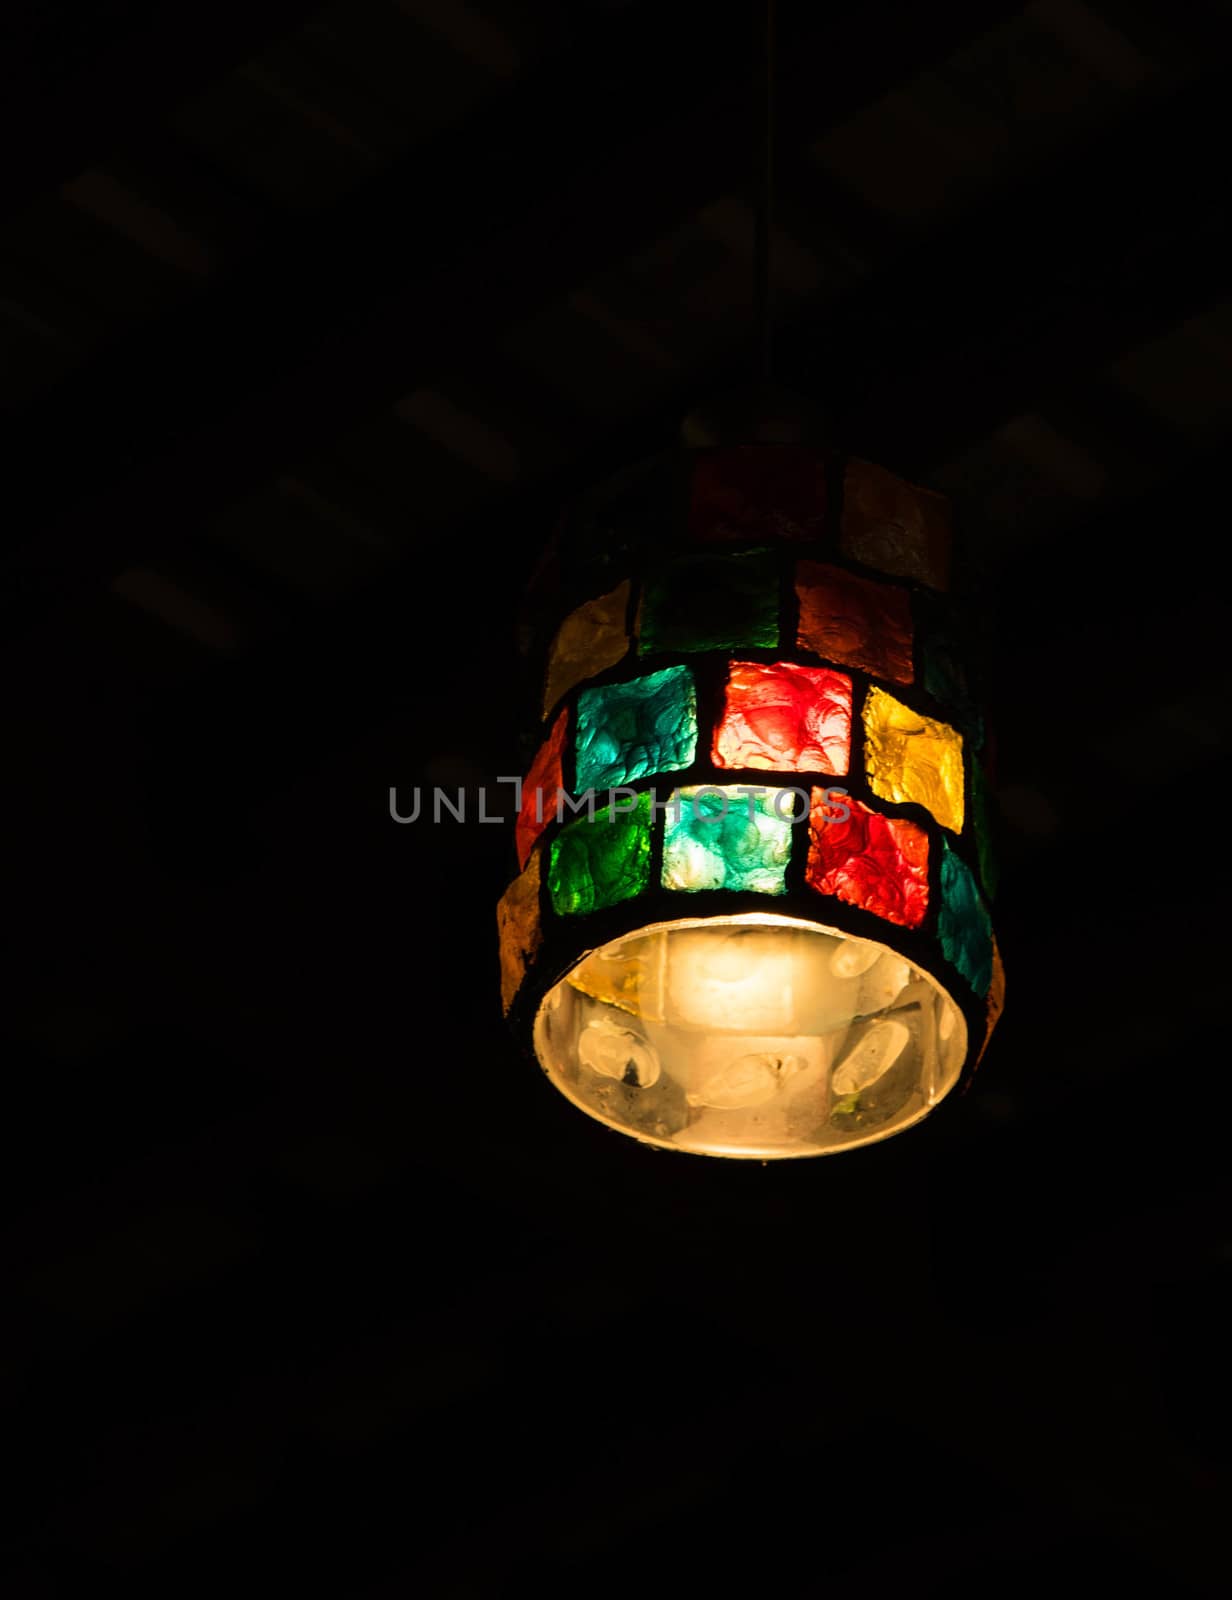 Colorful lantern